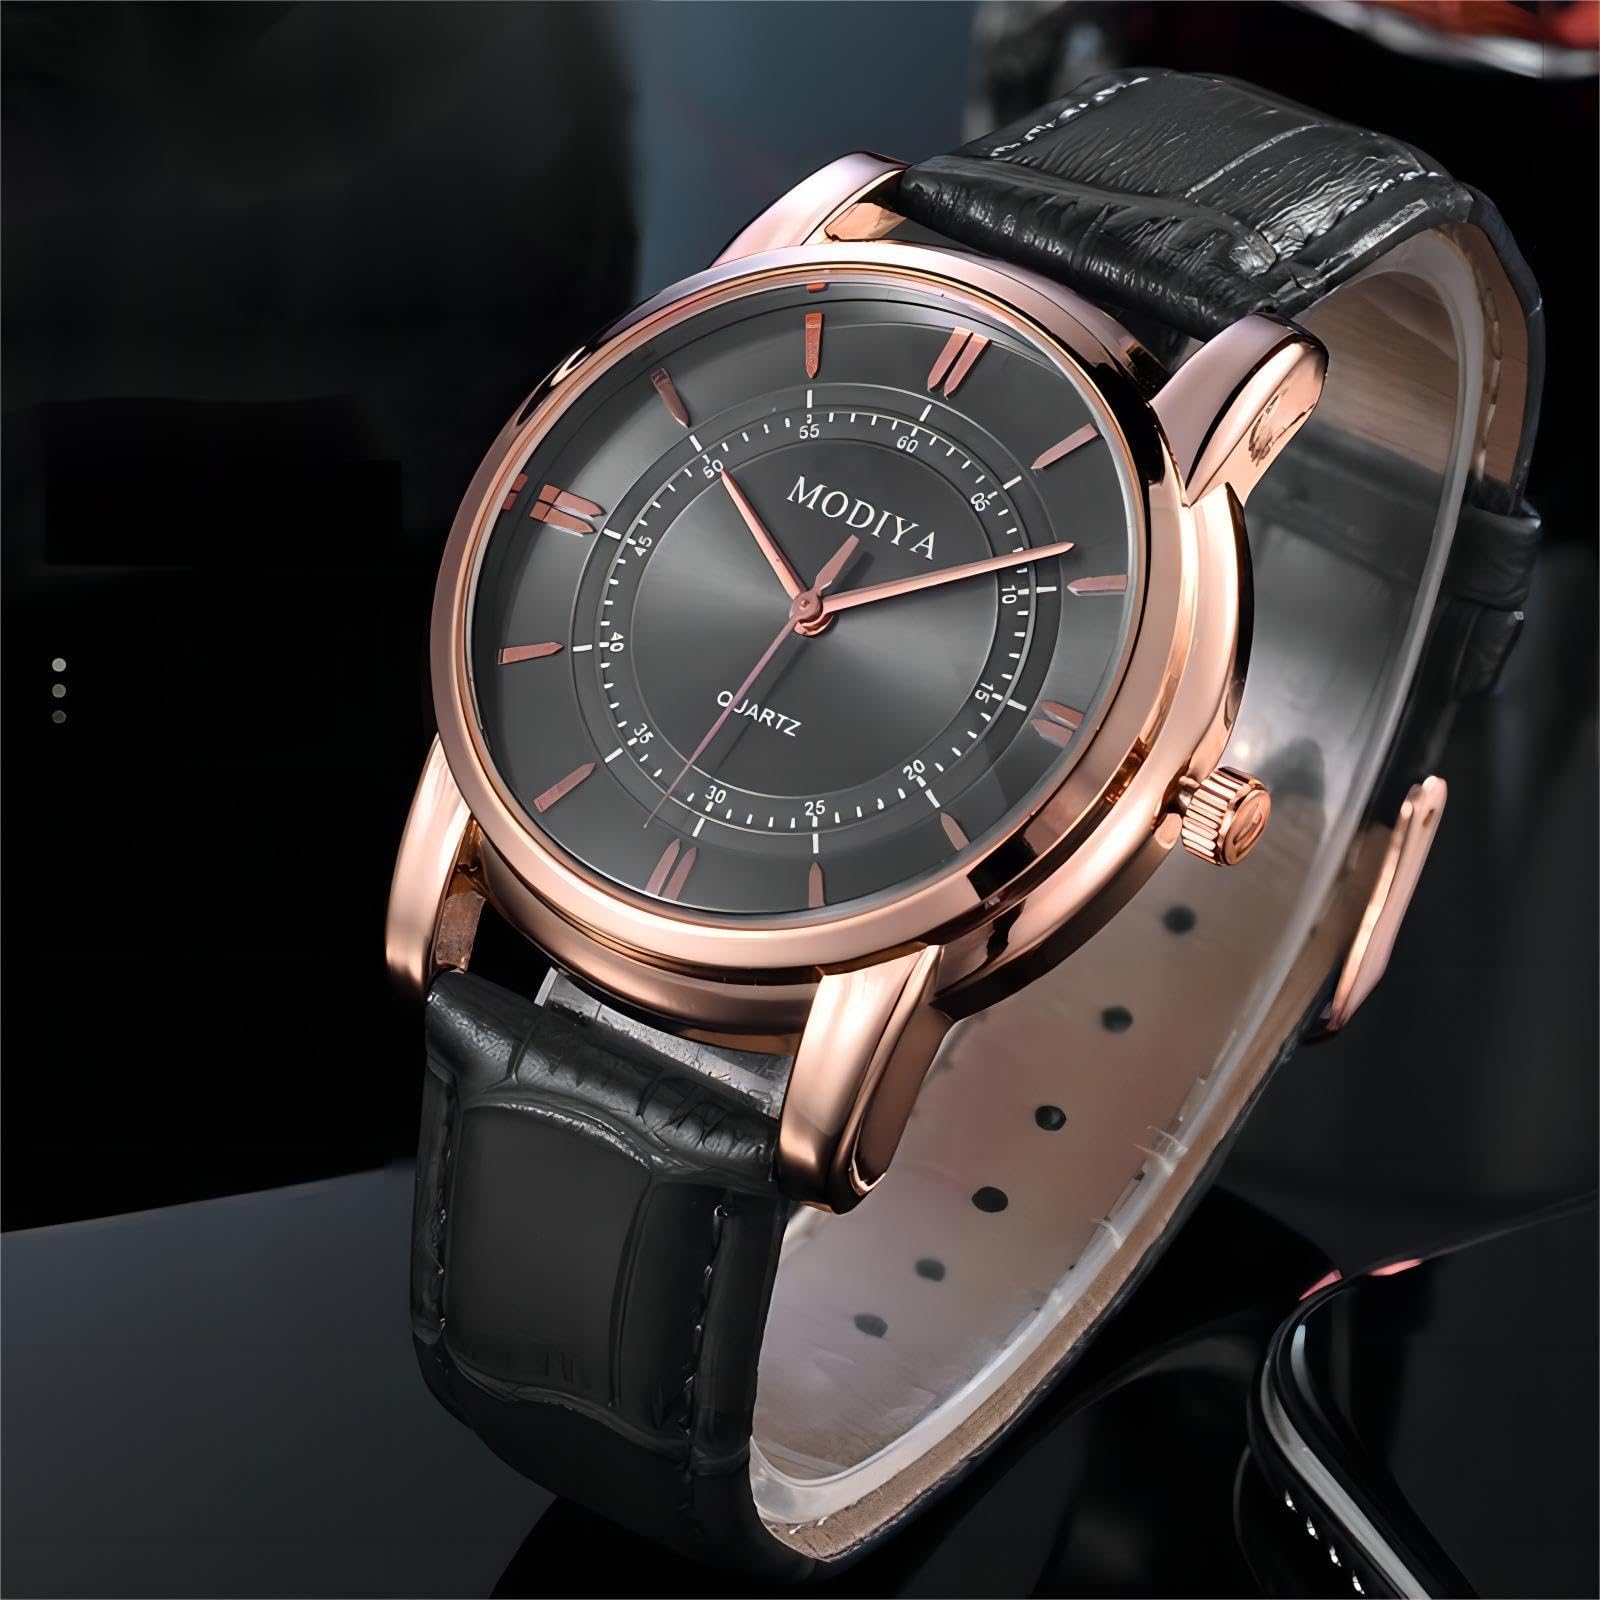 TPSOUM Men's Wrist Watches, Analog Quartz Business Style Men's Watch with Leather Strap